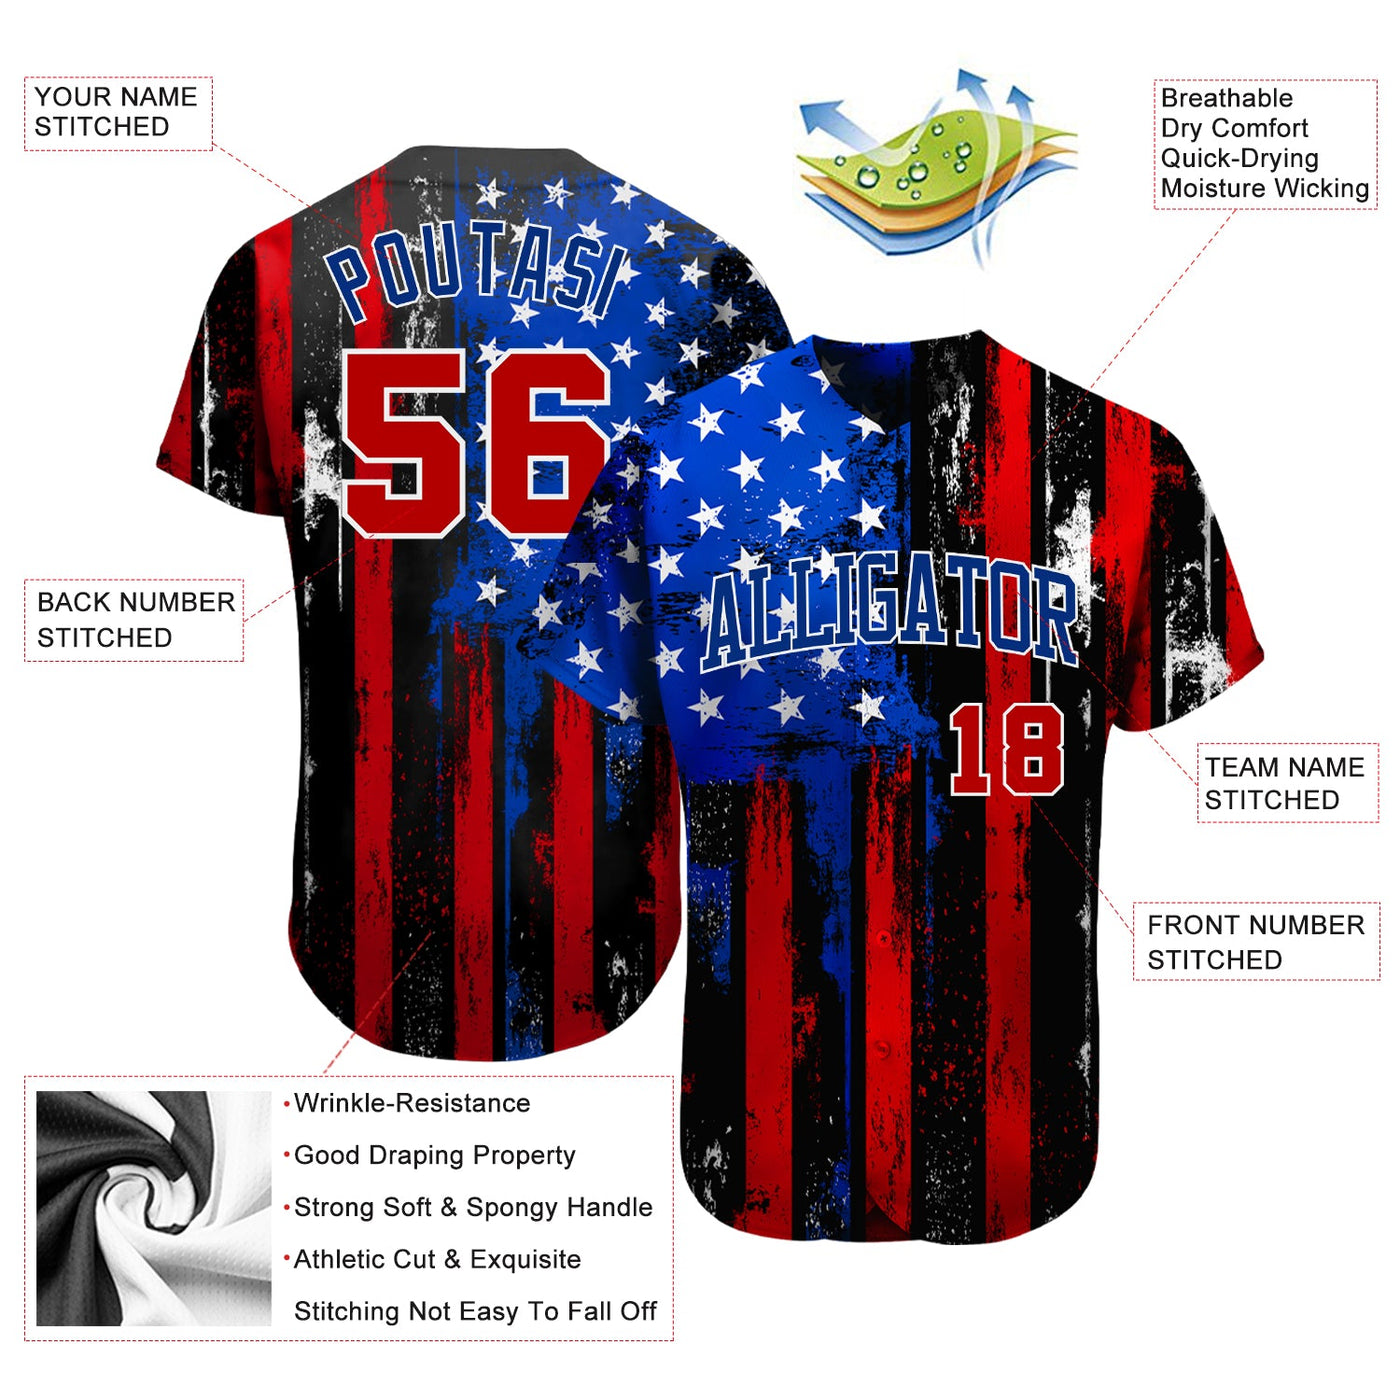 Custom Black Red Royal-White 3D Distressed American Flag Authentic Baseball Jersey - Owls Matrix LTD